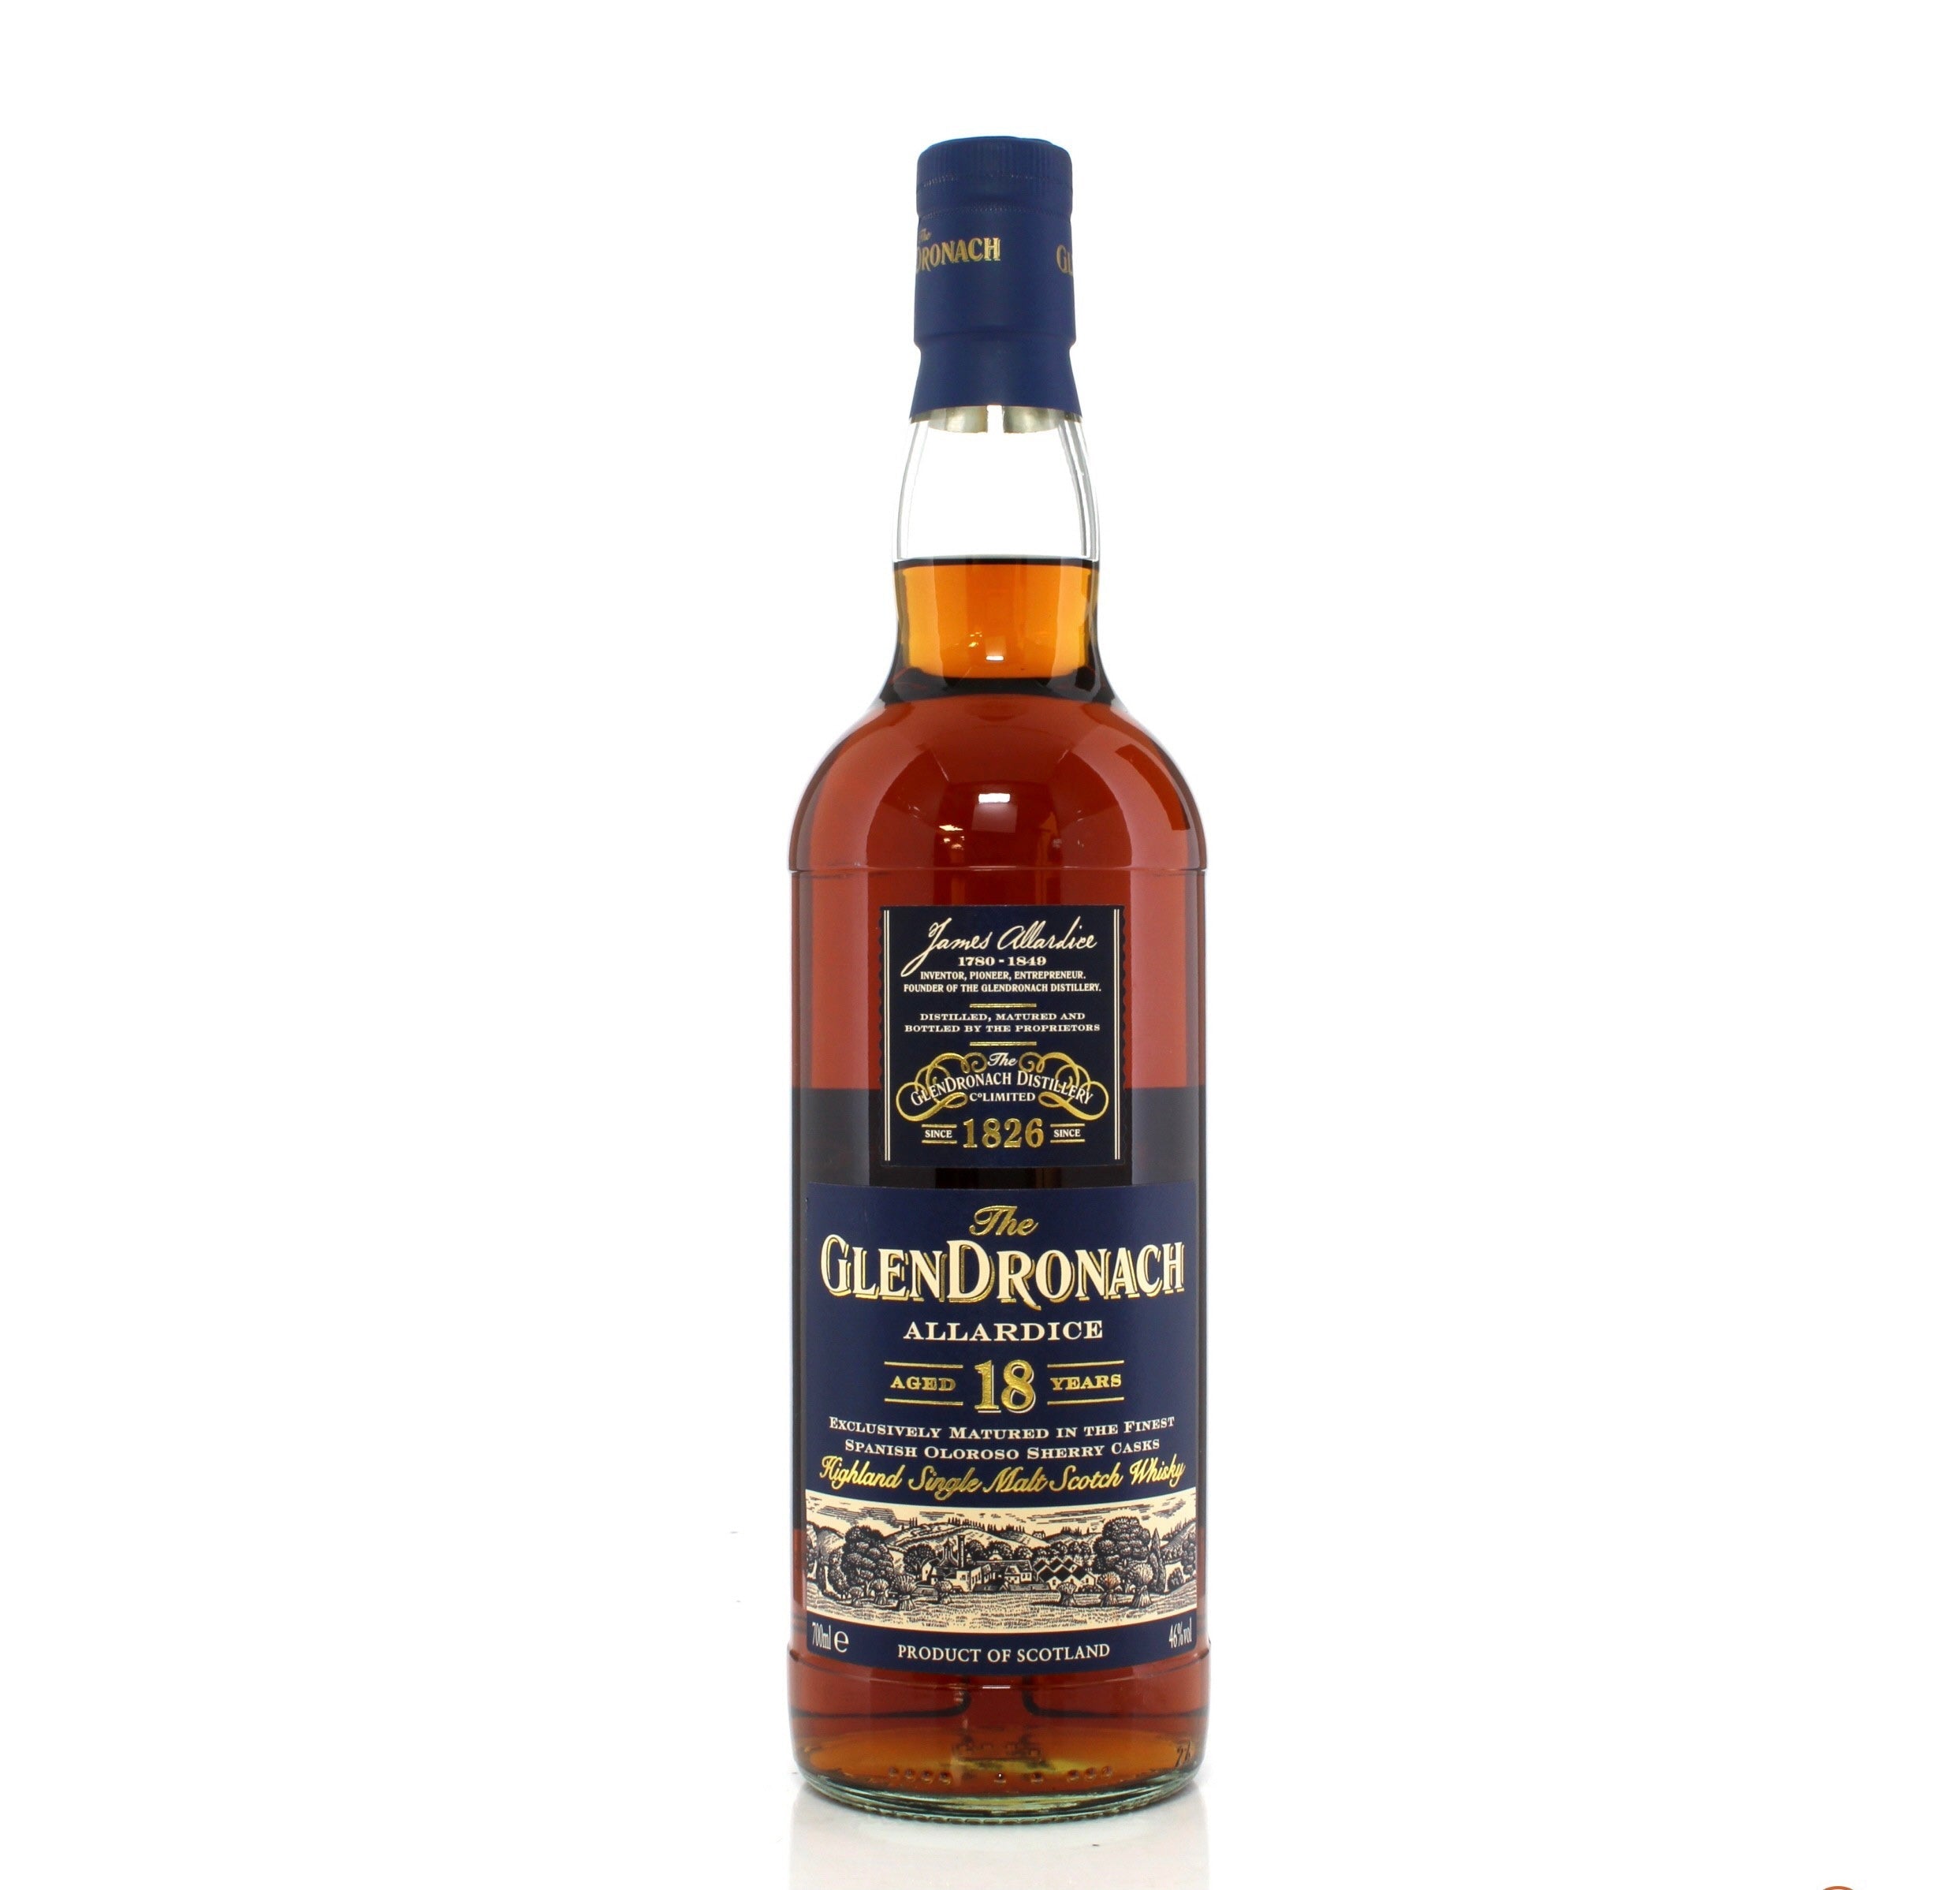 GlenDronach 18 Year Old Allardice Single Malt Scotch Whisky